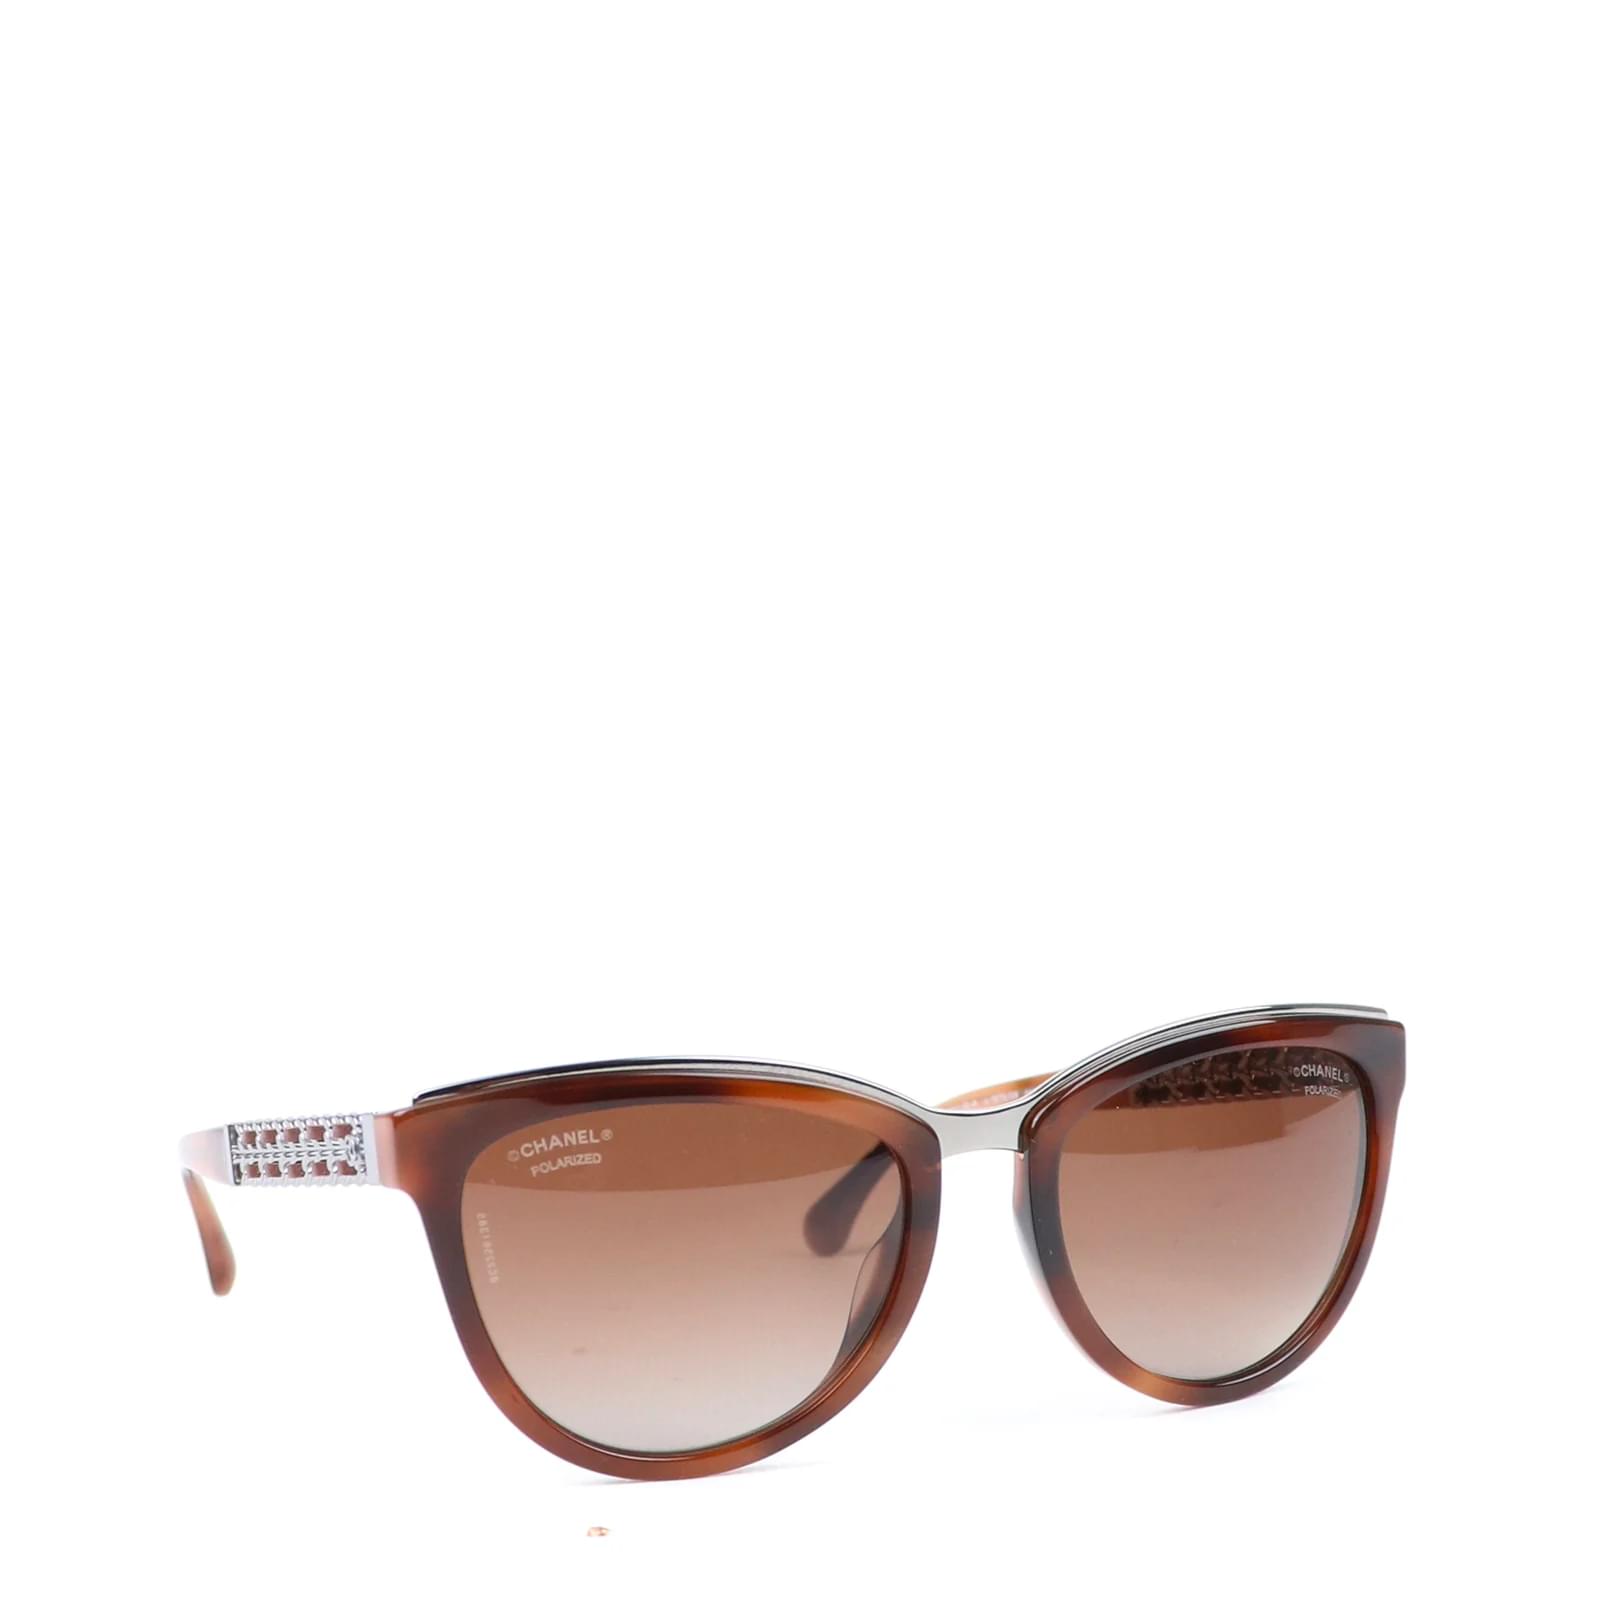 CHANEL Sunglasses brown women fashionable